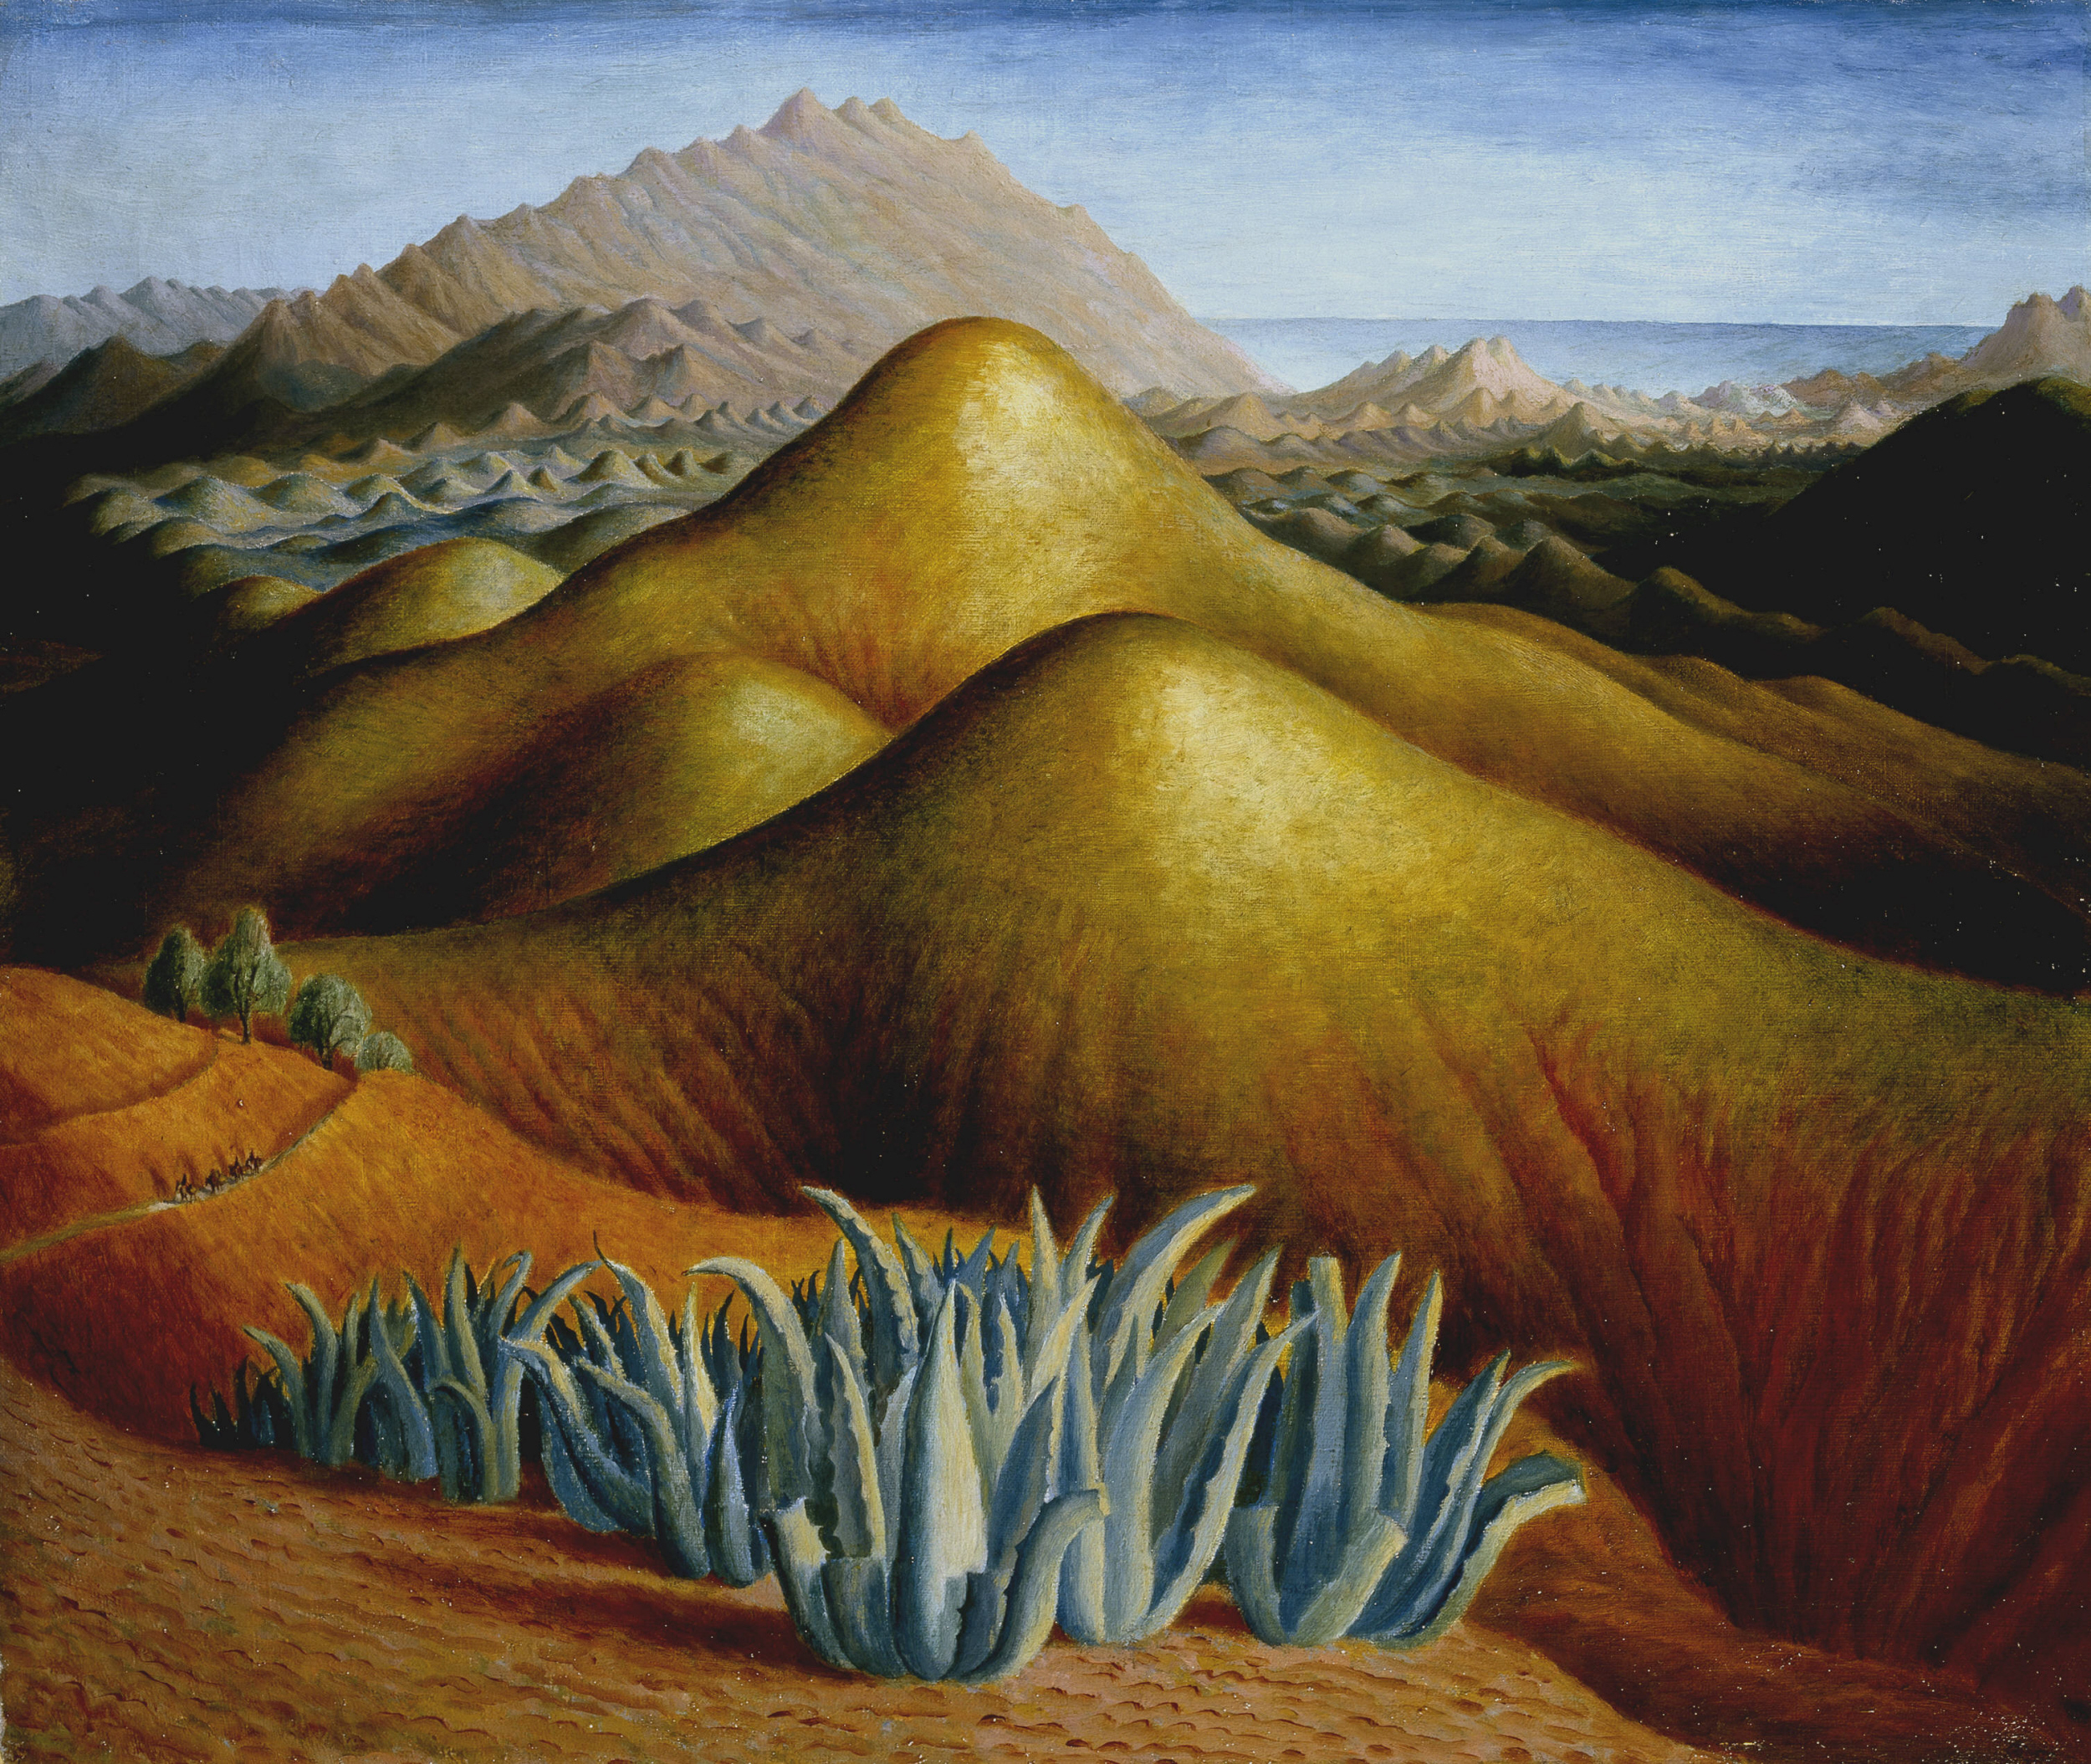 Spanish Landscape with Mountains by Dora Carrington - c. 1924 - 55.9 × 66.7 cm Tate Modern